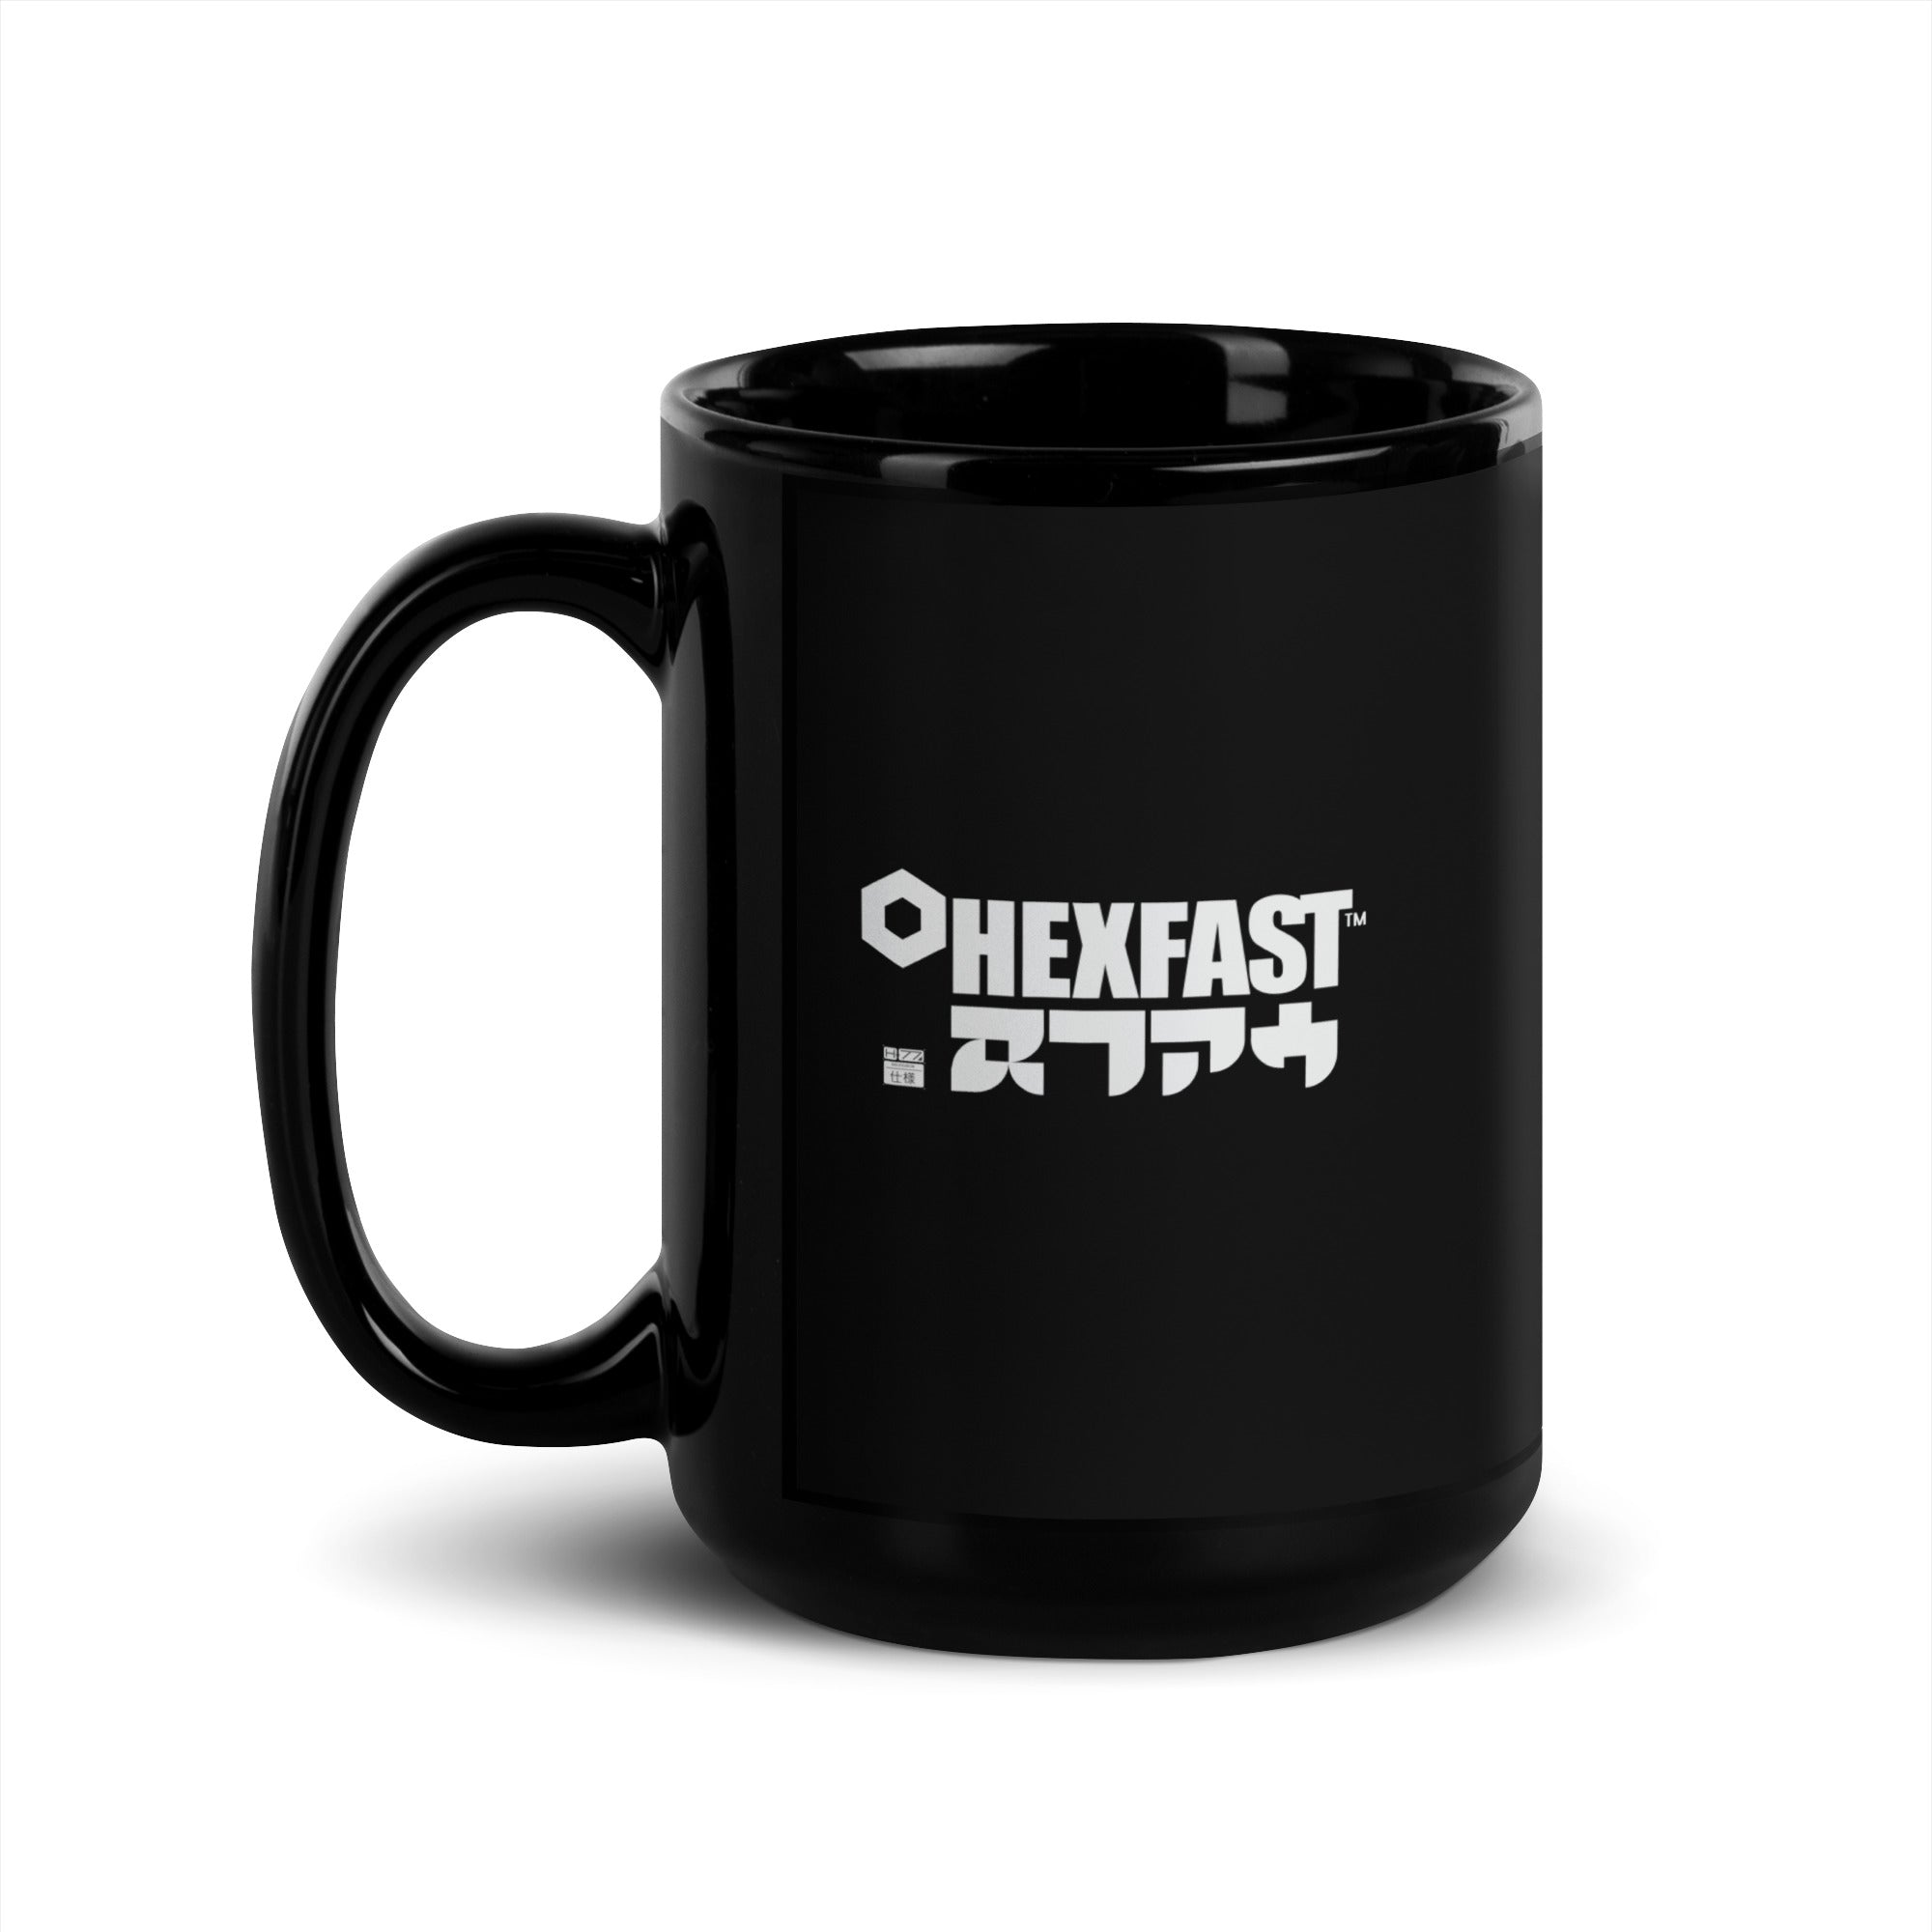 HEXFAST Mug